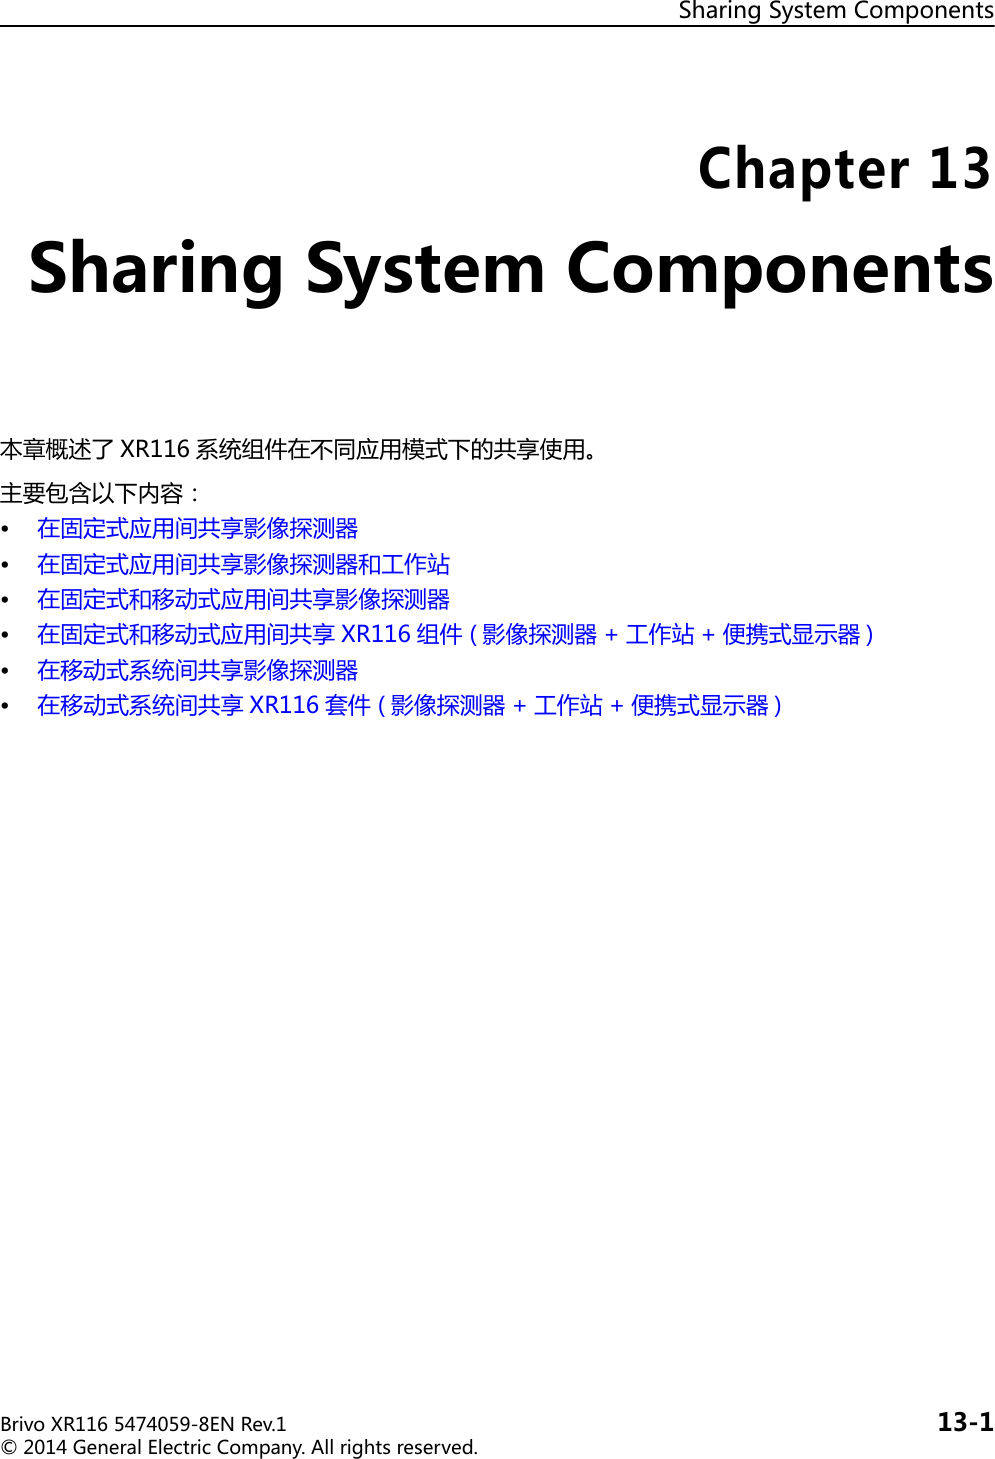 SharingSystemComponentsBrivoXR1165474059-8ENRev.1 13-1©2014GeneralElectricCompany.Allrightsreserved.Chapter13SharingSystemComponents本章概述了 XR116 系统组件在不同应用模式下的共享使用。主要包含以下内容：• 在固定式应用间共享影像探测器• 在固定式应用间共享影像探测器和工作站• 在固定式和移动式应用间共享影像探测器• 在固定式和移动式应用间共享 XR116 组件( 影像探测器 + 工作站 + 便携式显示器 )• 在移动式系统间共享影像探测器• 在移动式系统间共享 XR116 套件( 影像探测器 + 工作站 + 便携式显示器 )